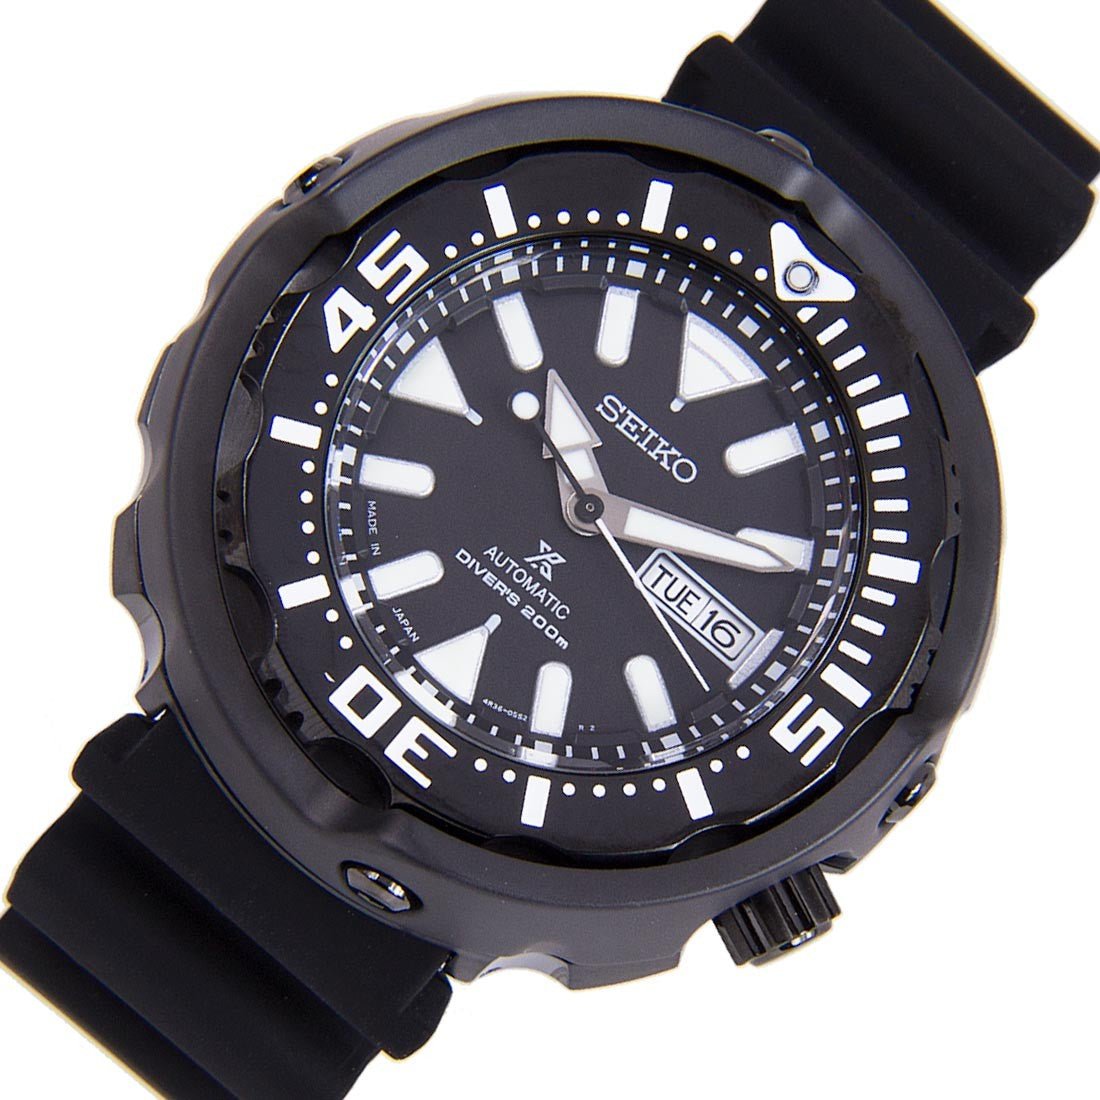 Seiko Prospex Made in Japan Automatic Watch SRPA81J1 SRPA81 SRPA81J -Seiko